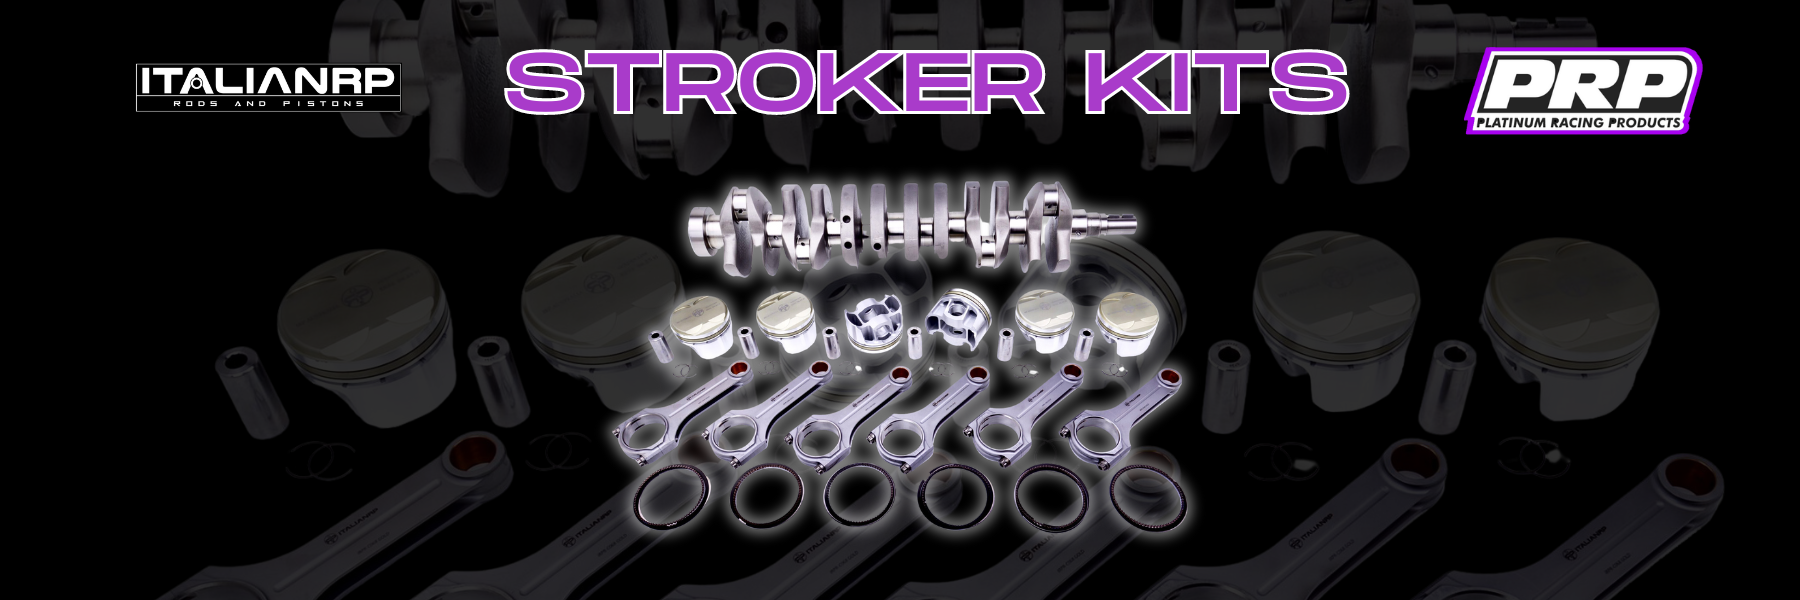 PRP x Italian RP Stroker Kits